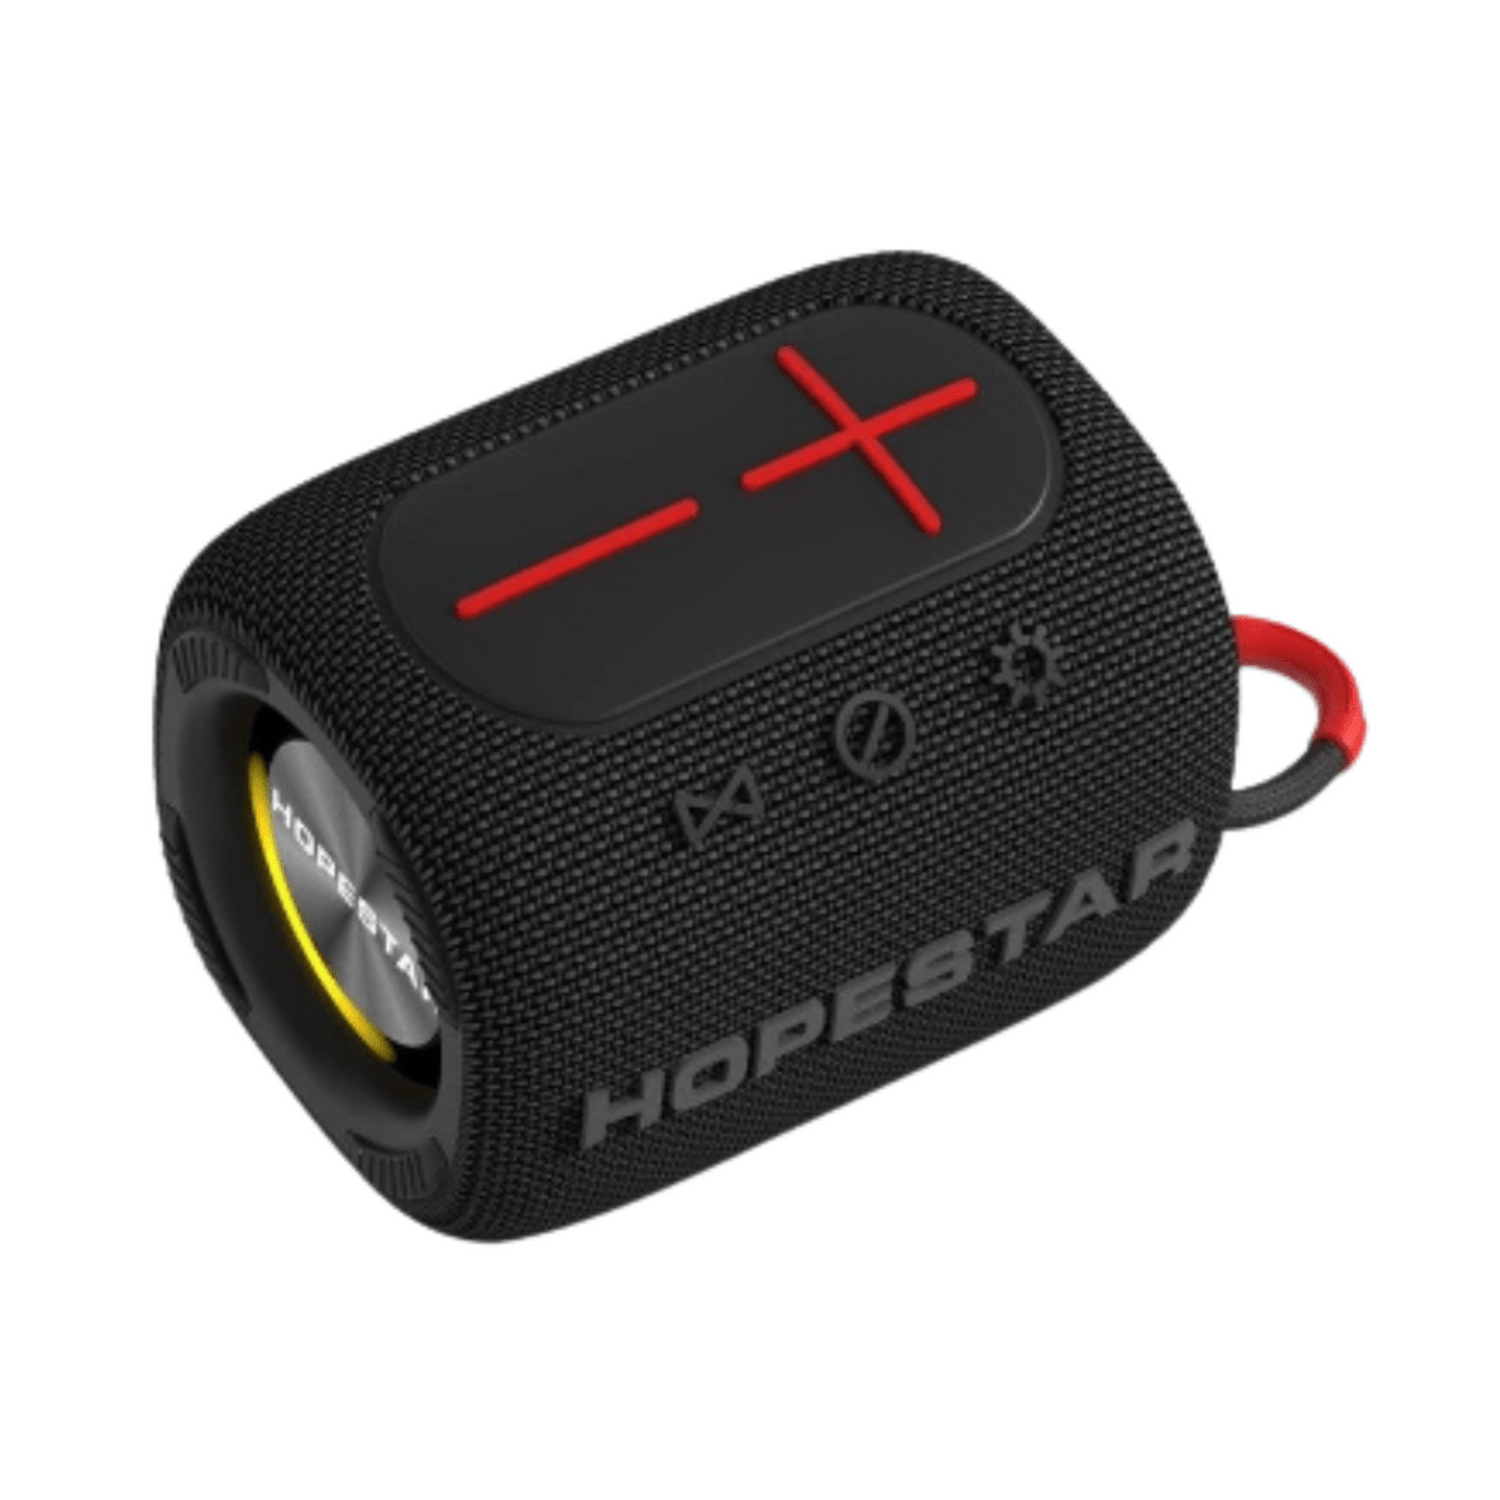 Mini Parlante Bluetooth Altavoz Subwoofer Inalambrico Recargable Gris -  Promart